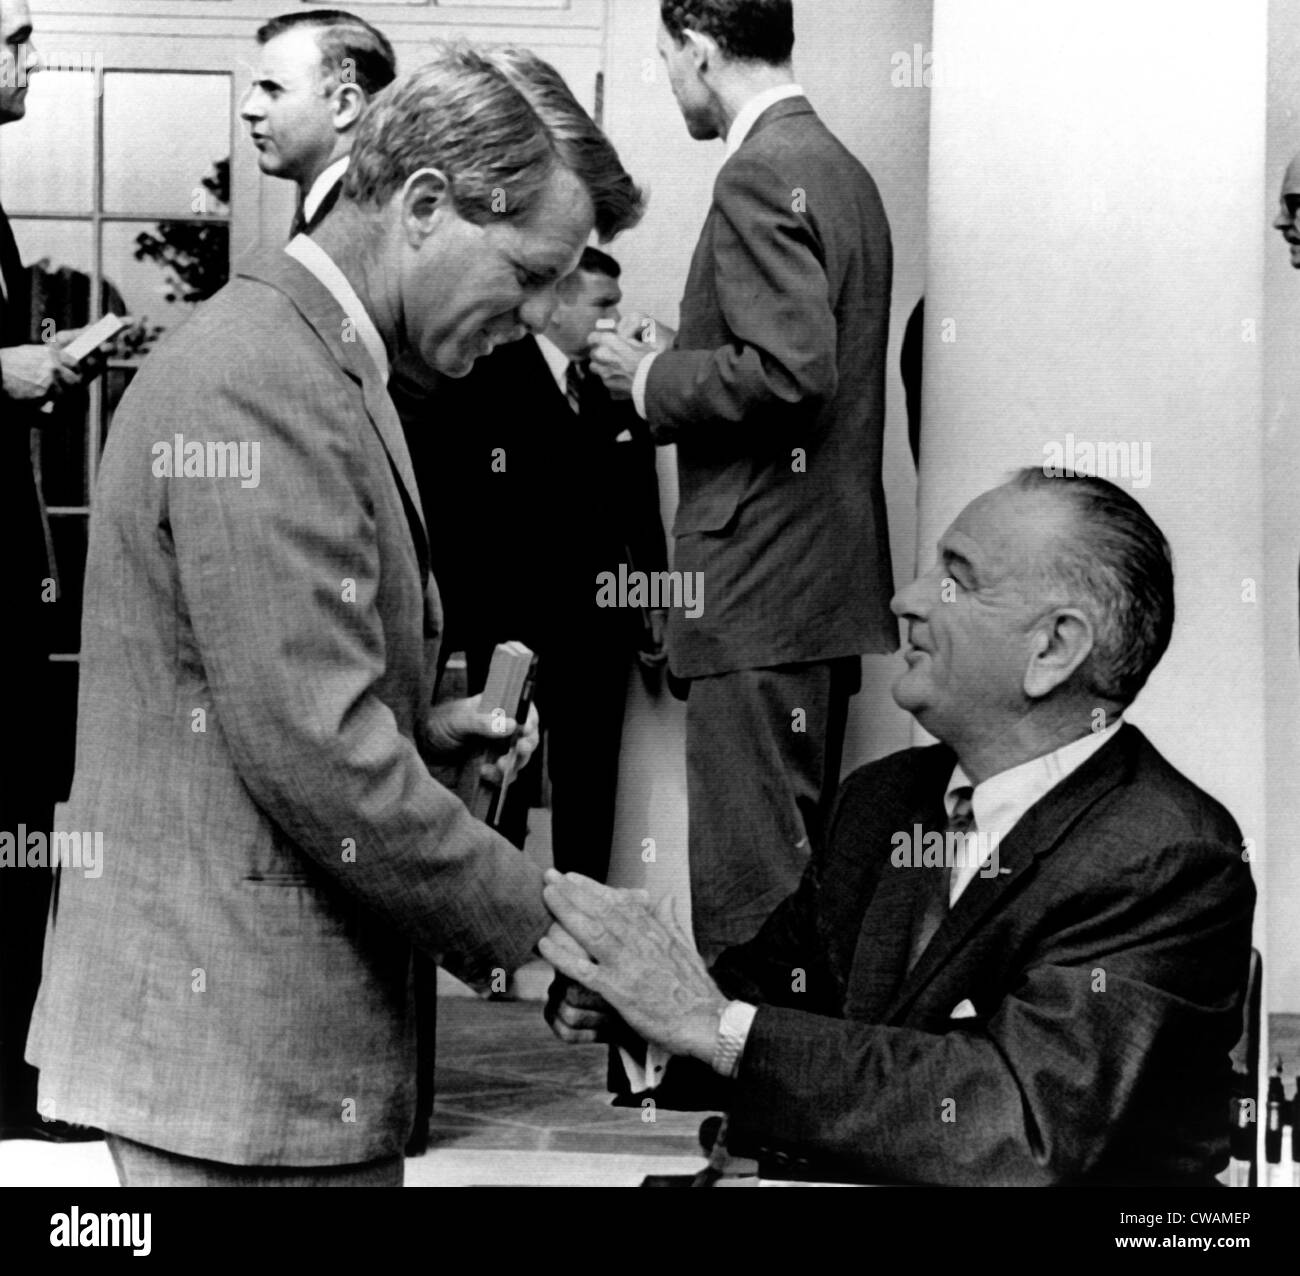 Senator Robert F. Kennedy shakes hands with President Lyndon Johnson, 1965. Courtesy: CSU Archives / Everett Collection Stock Photo